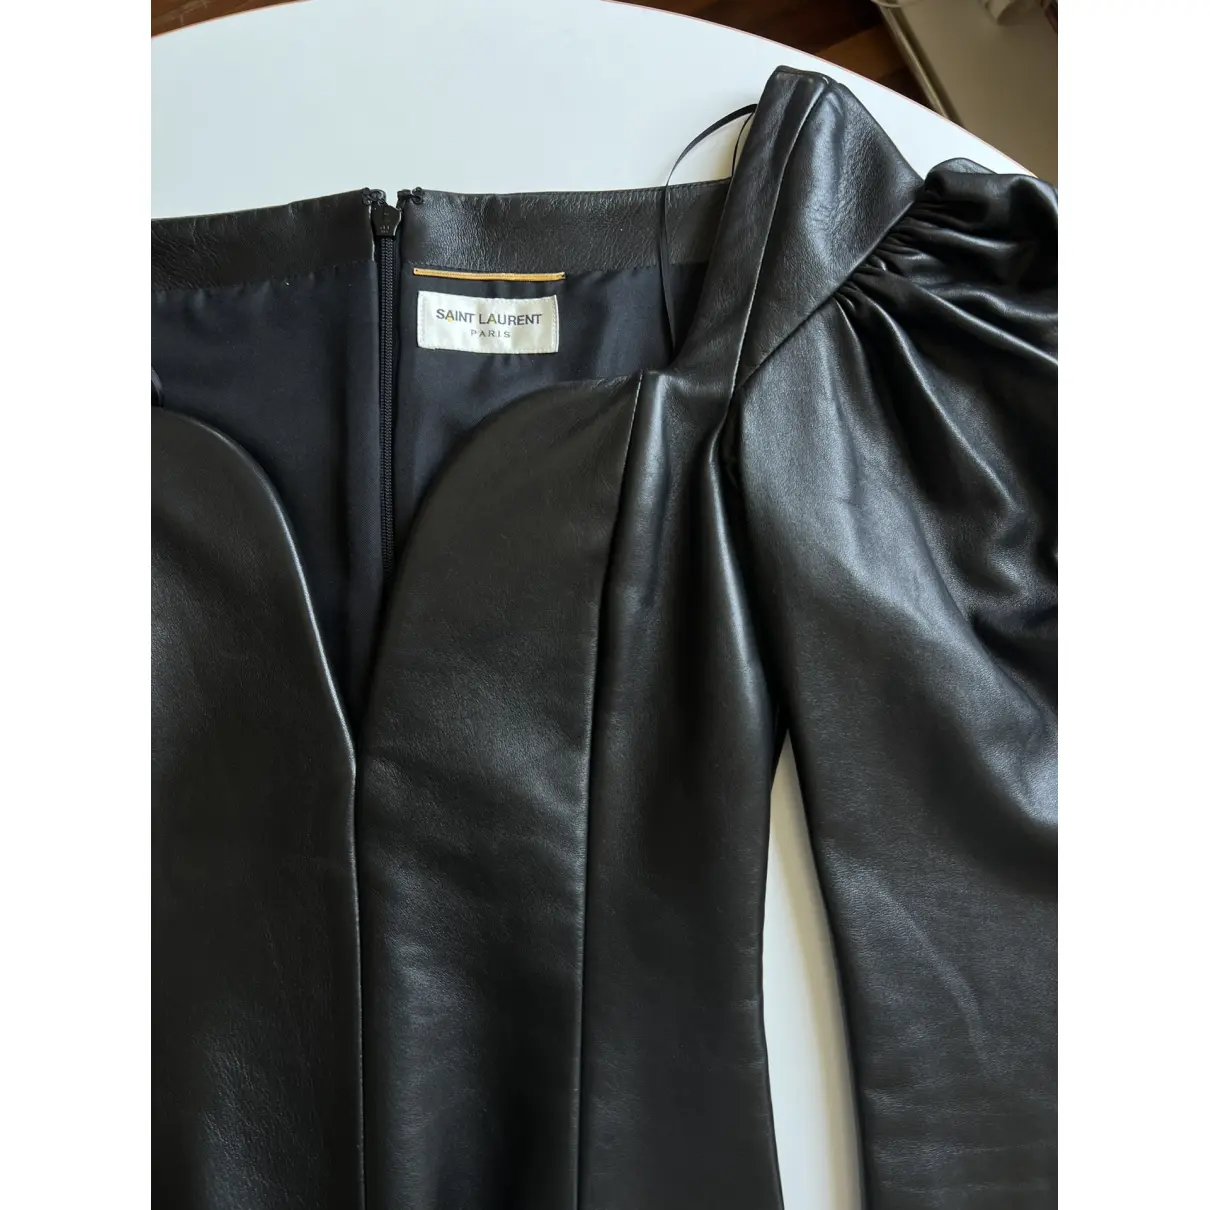 Buy Saint Laurent Leather corset online